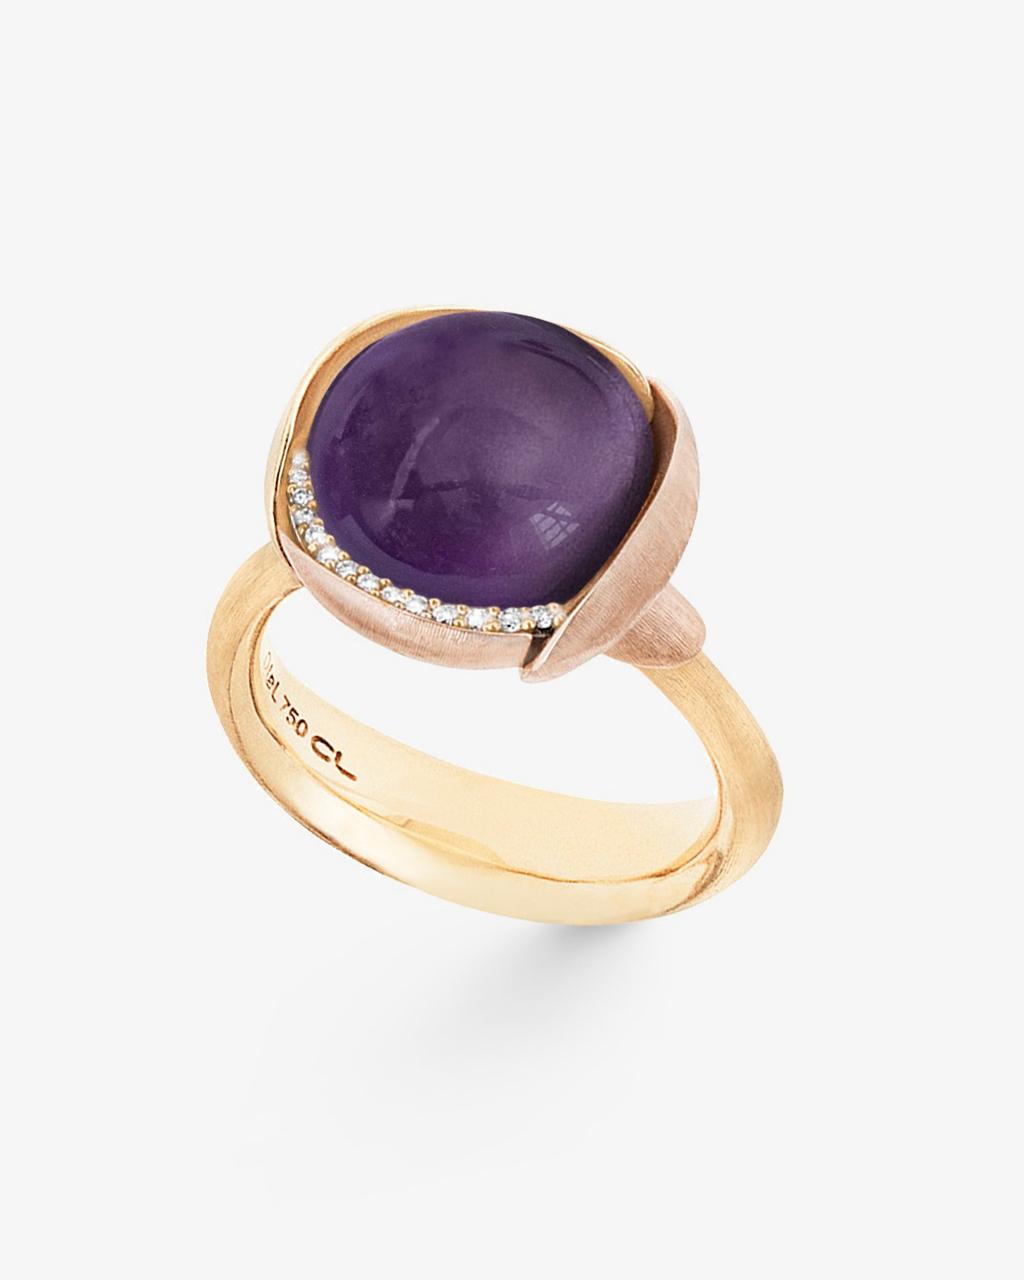 Ole Lynggaard 'Lotus' Amethyst & Diamond Ring - Size 3